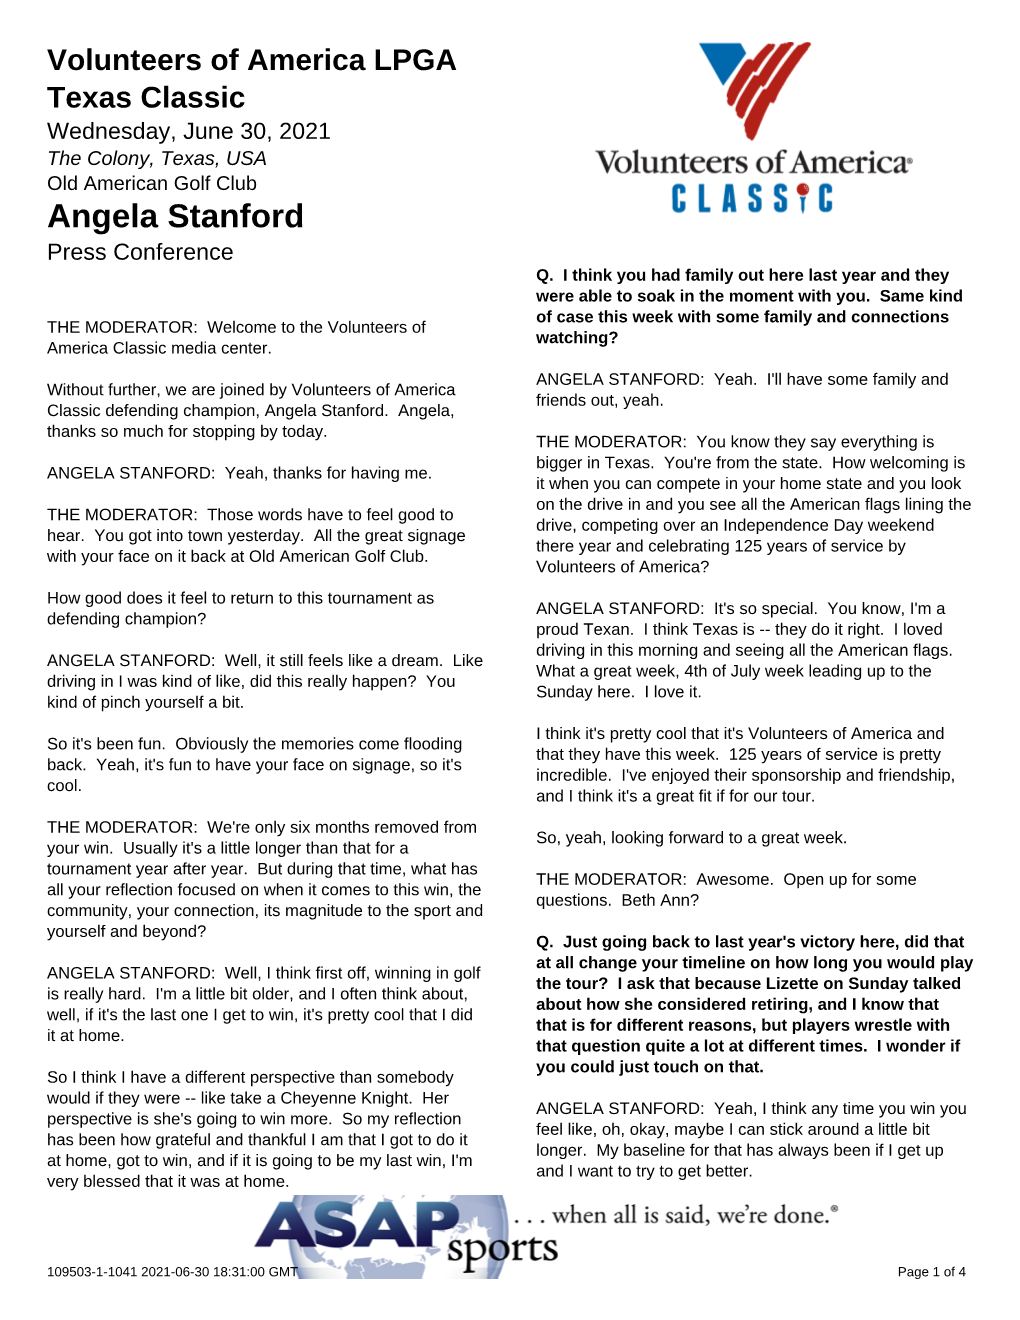 Angela Stanford Press Conference Q